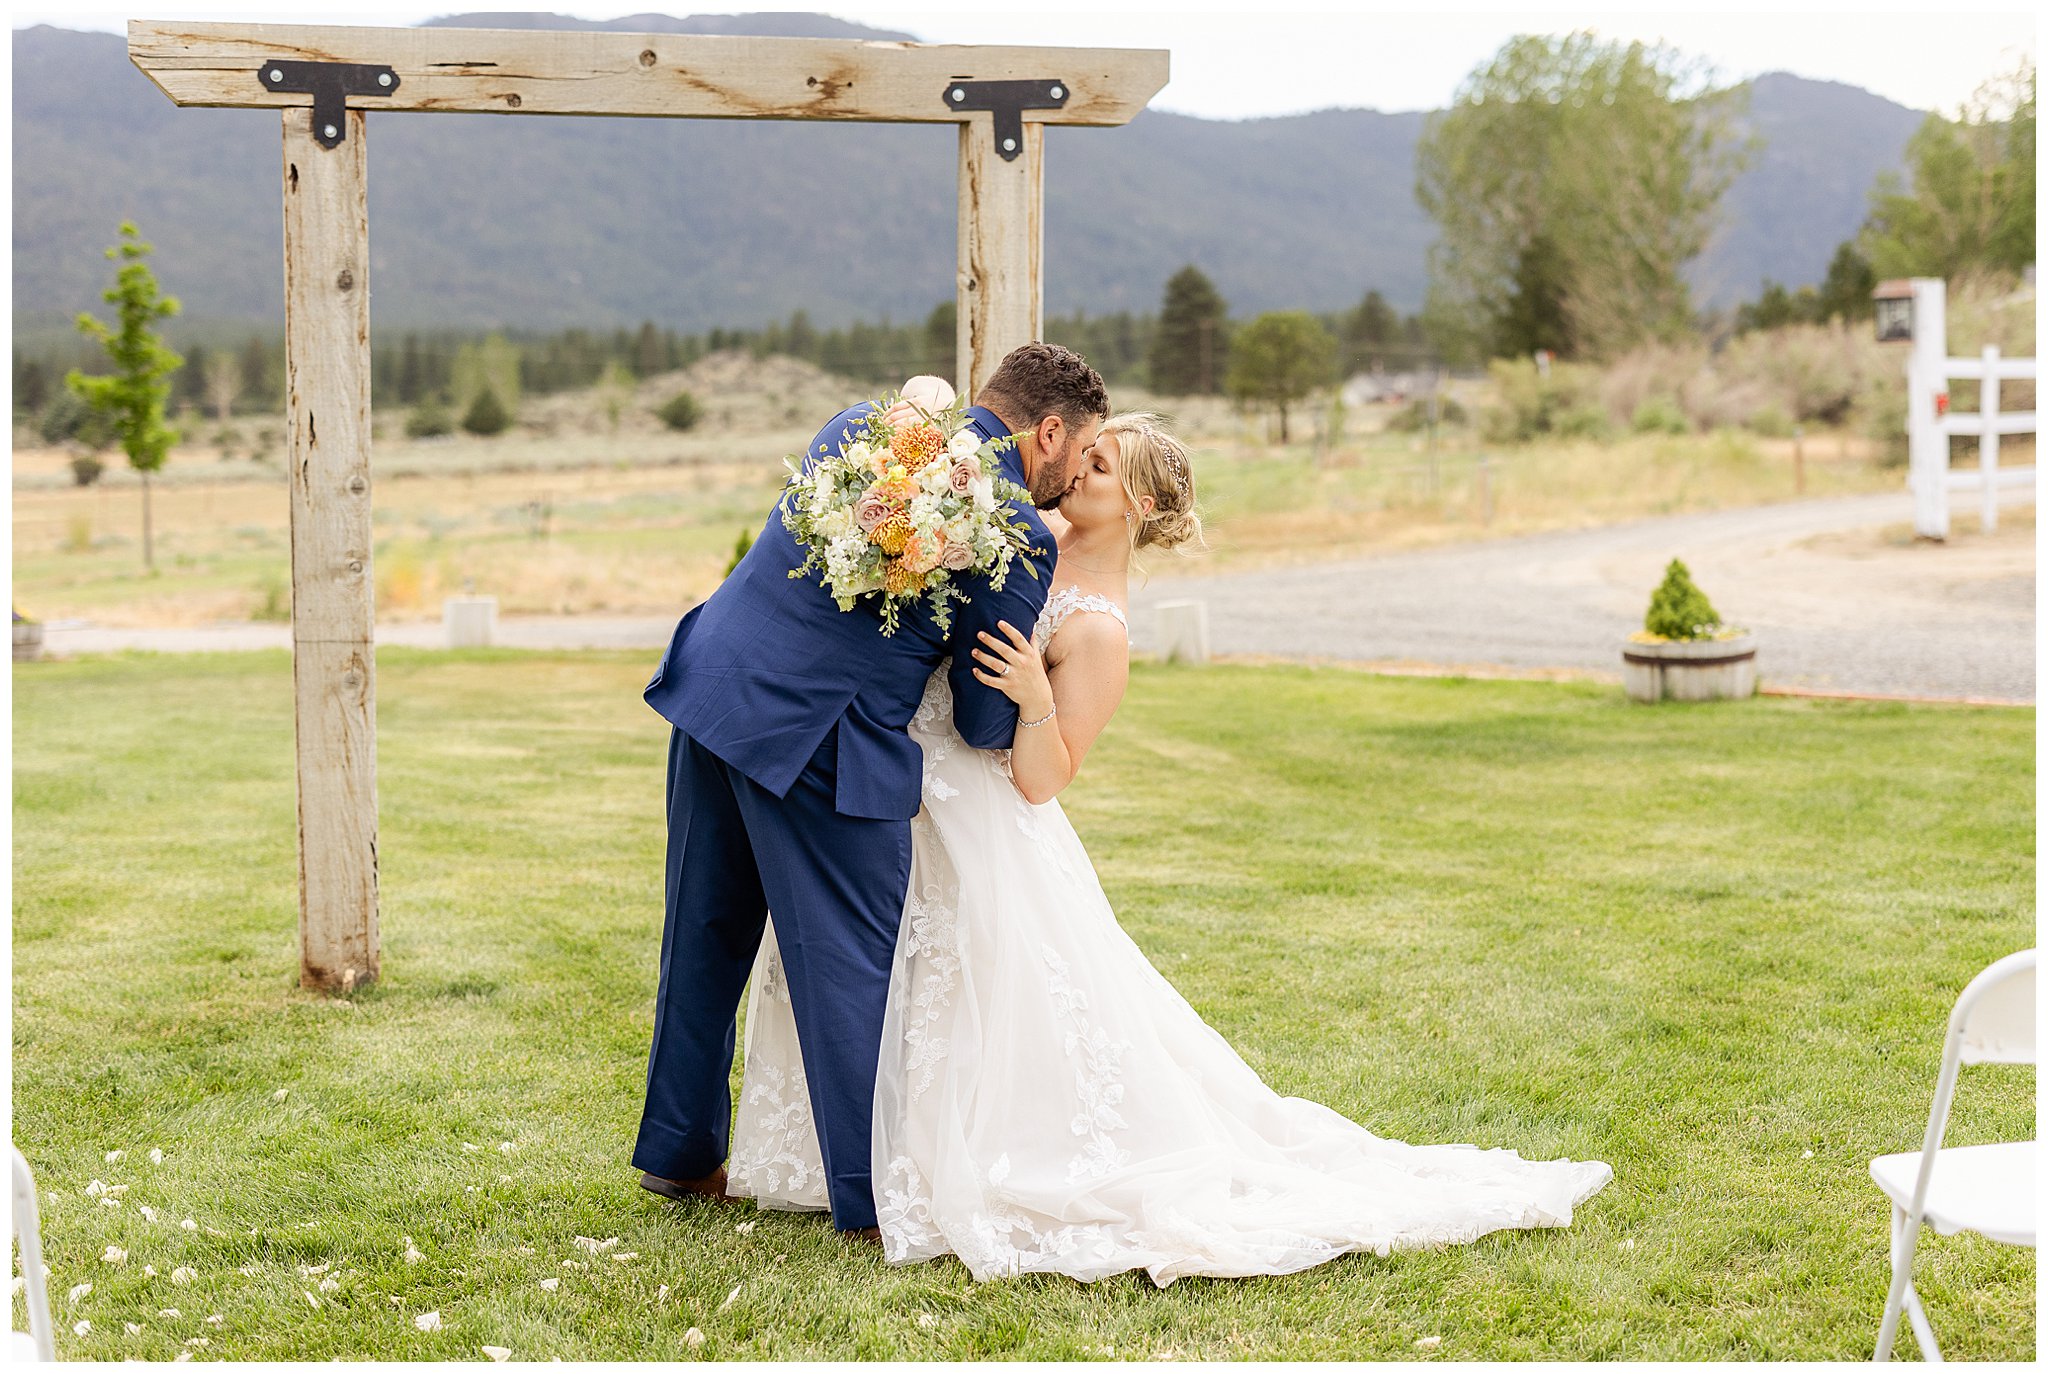 Sentimental Journey Weddings Janesville CA Mountain Wedding Desert Coral and Blue First Look Flower Girl,